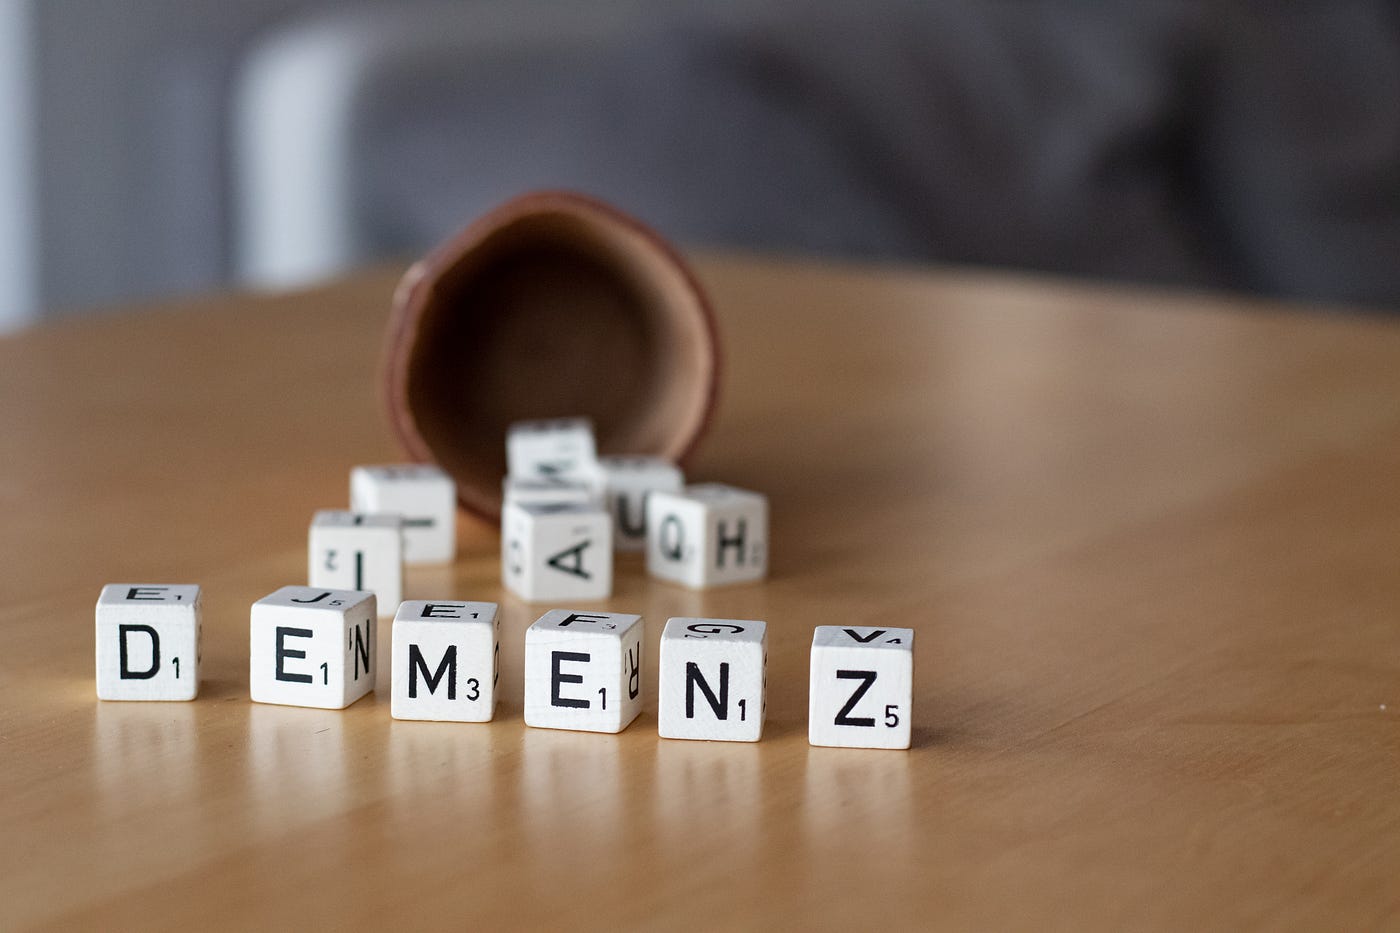 Scrabble cubes spelling out “DEMENZ”